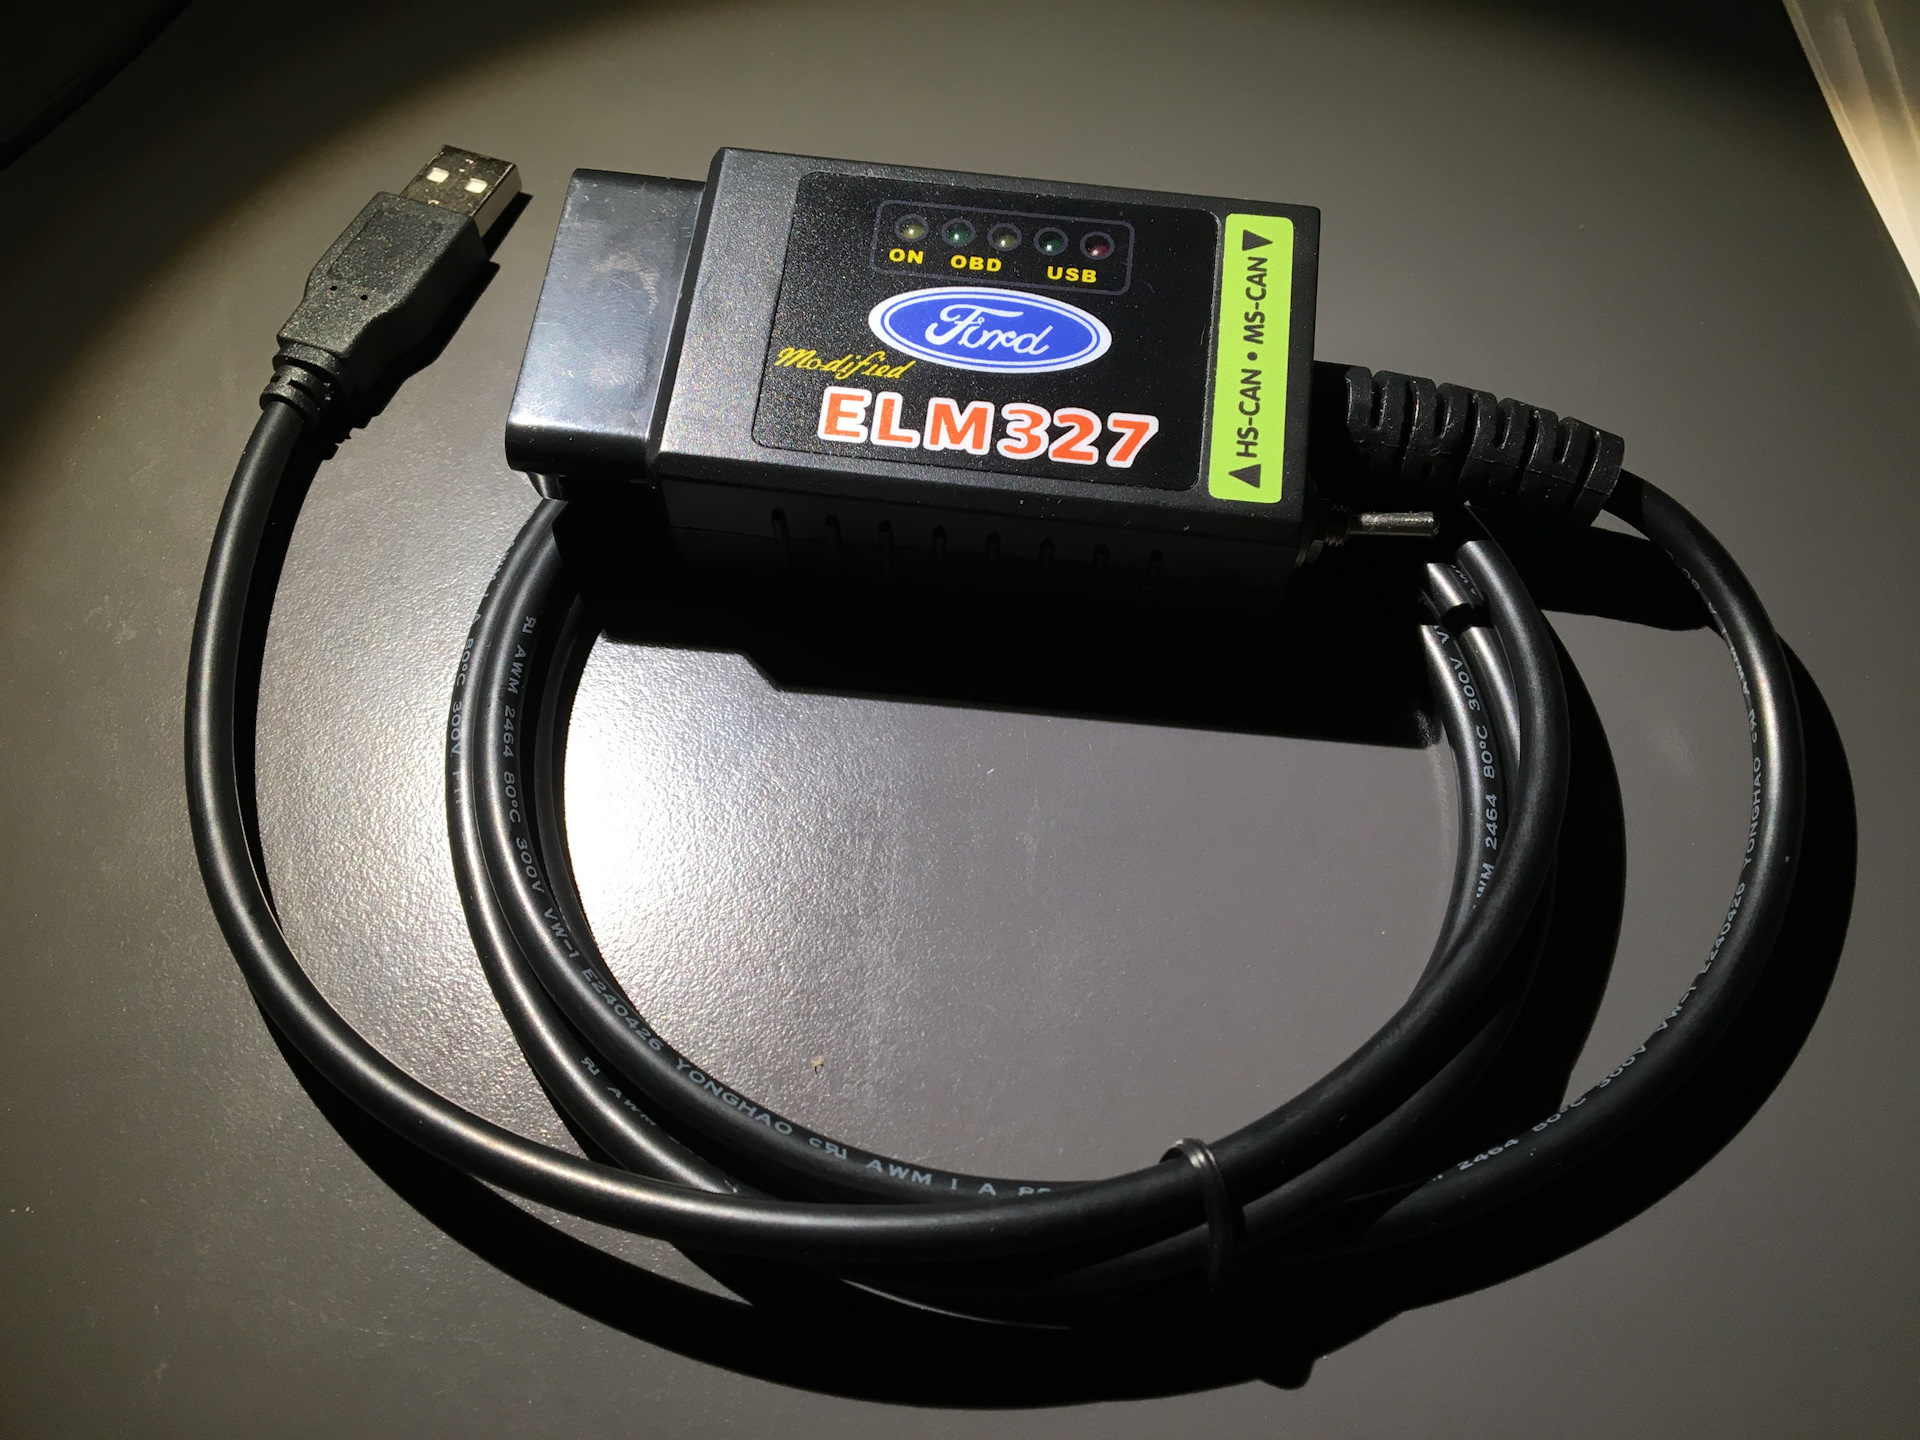 Елм форскан. Елм 327 USB. Elm327 Ford. FORSCAN С переключателем elm327 USB. Елм 327 с переключателем для Форд.